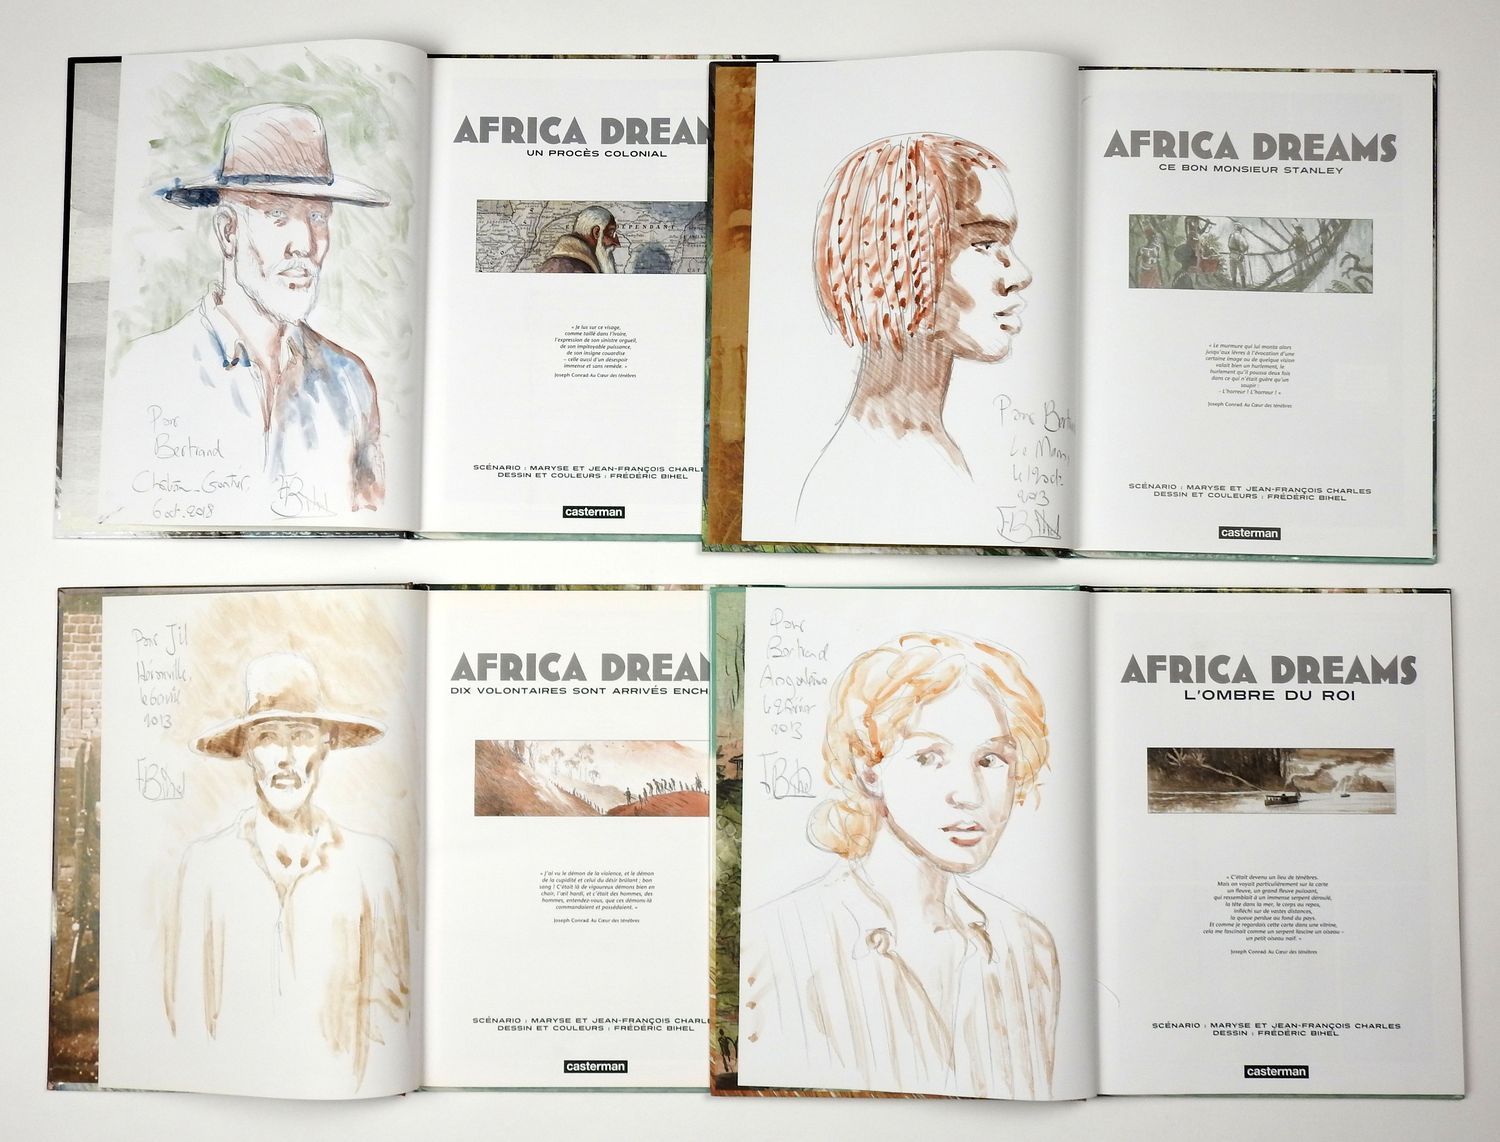 Null 毕晓明（Frédéric

非洲之梦

第1至4卷初版，有图画

状况非常好，专辑末尾有收藏家的印章